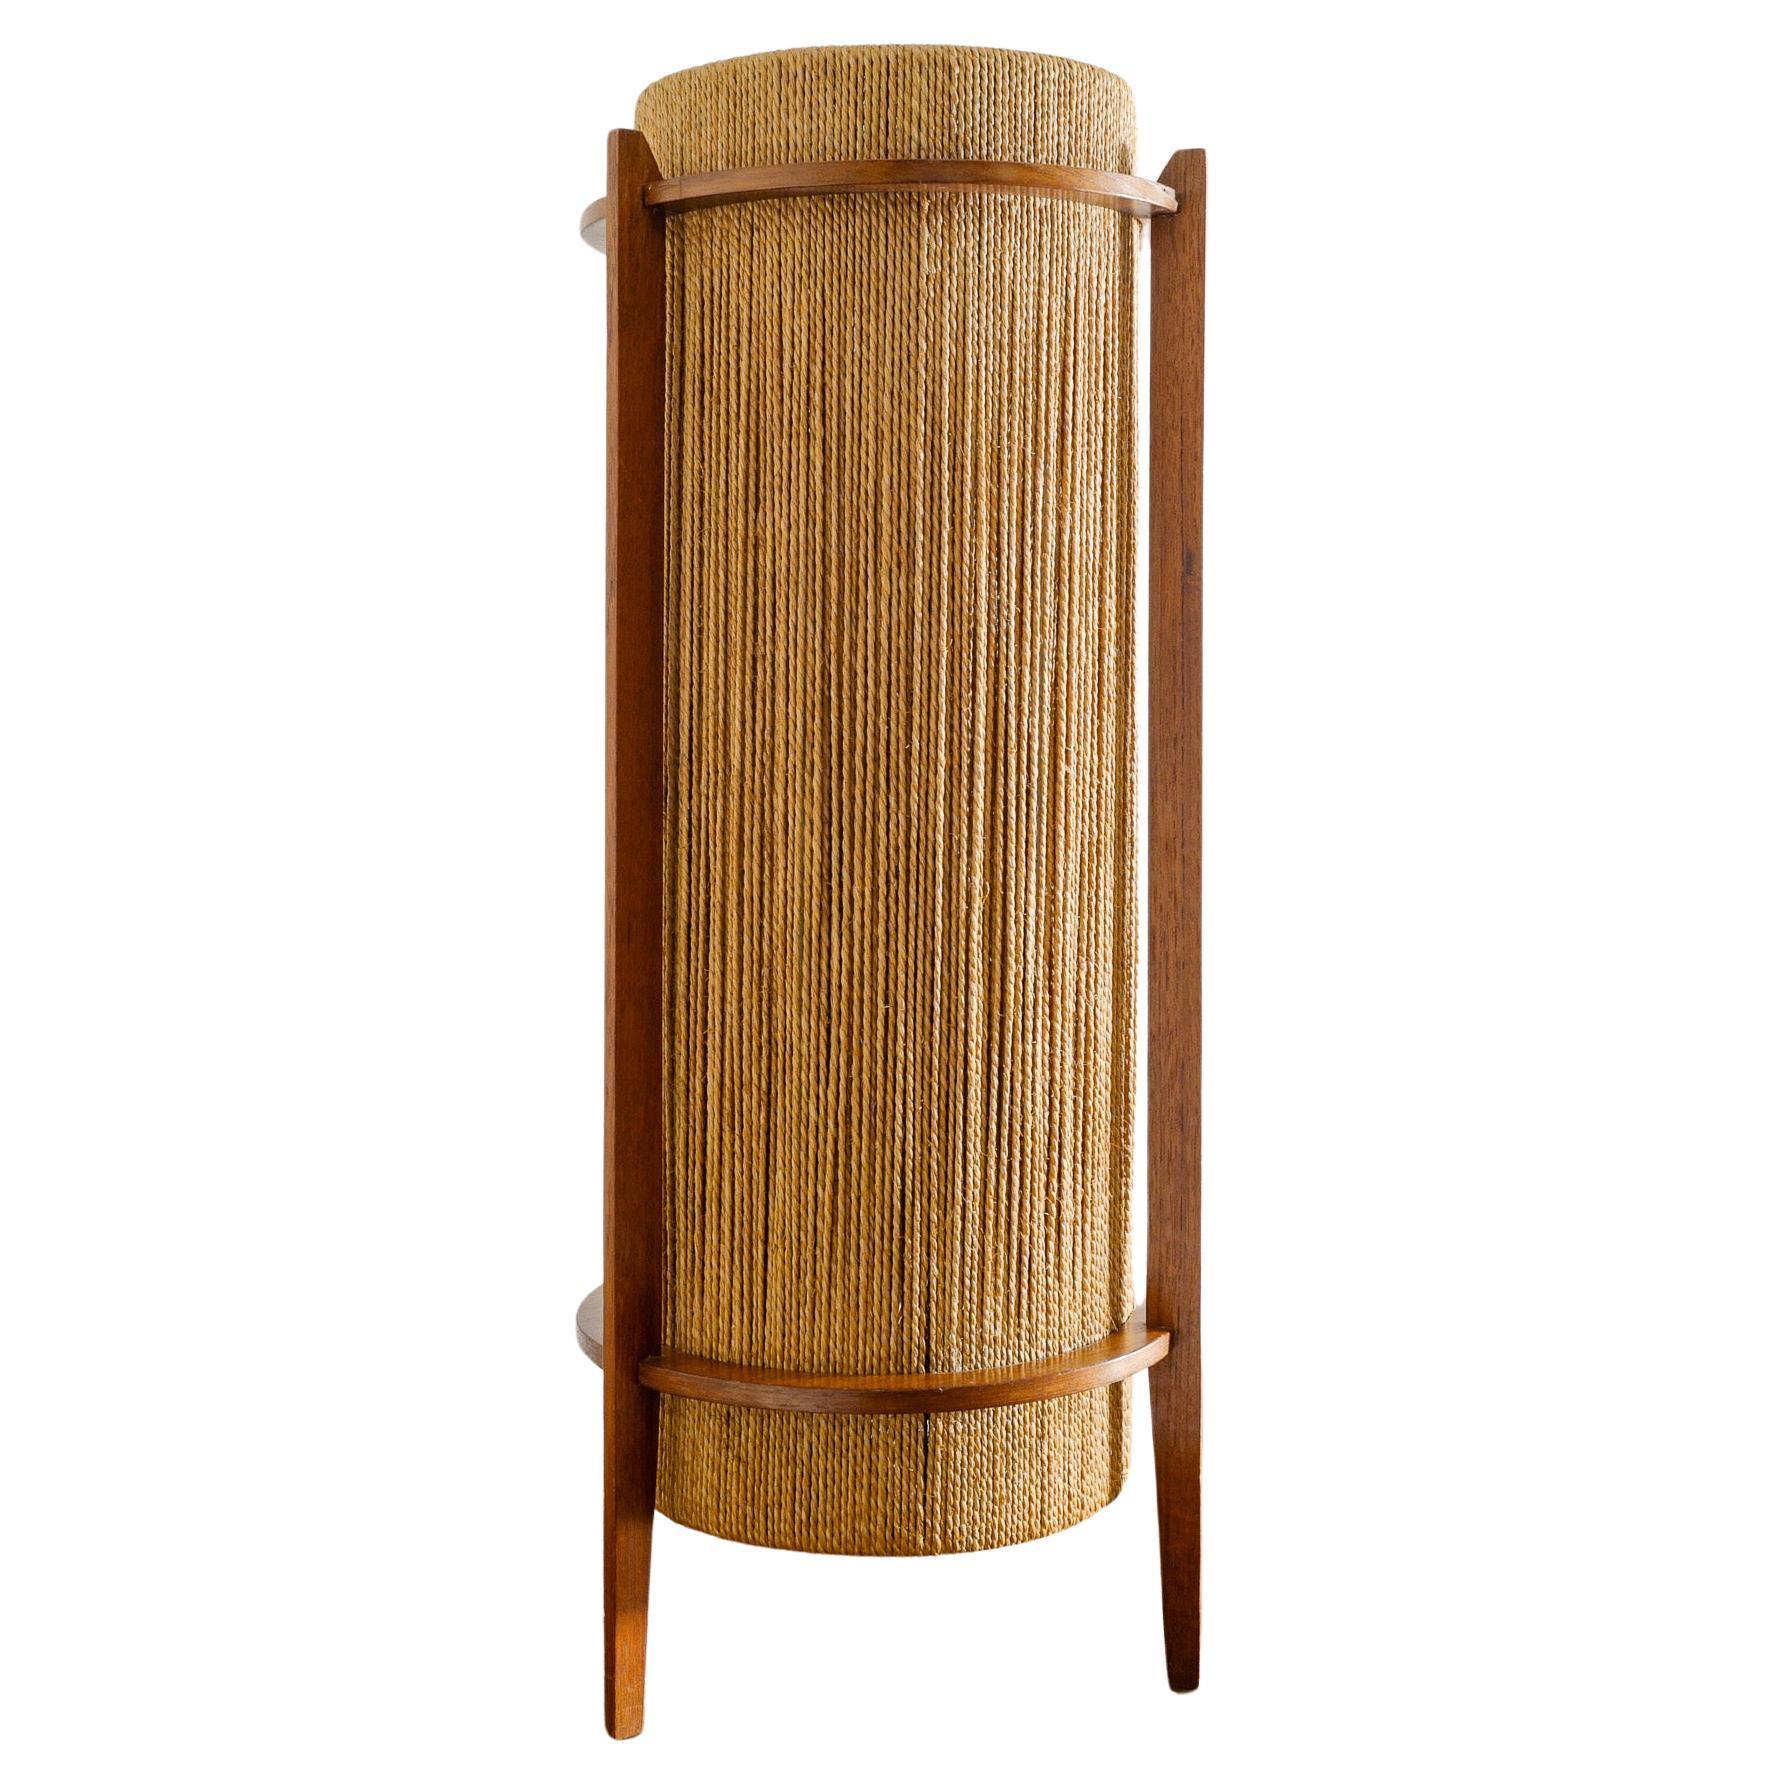 Danish Mid Century Table / Floor Lamp in Teak Wood & Hemp by Ib Fabiansen 1950s  For Sale